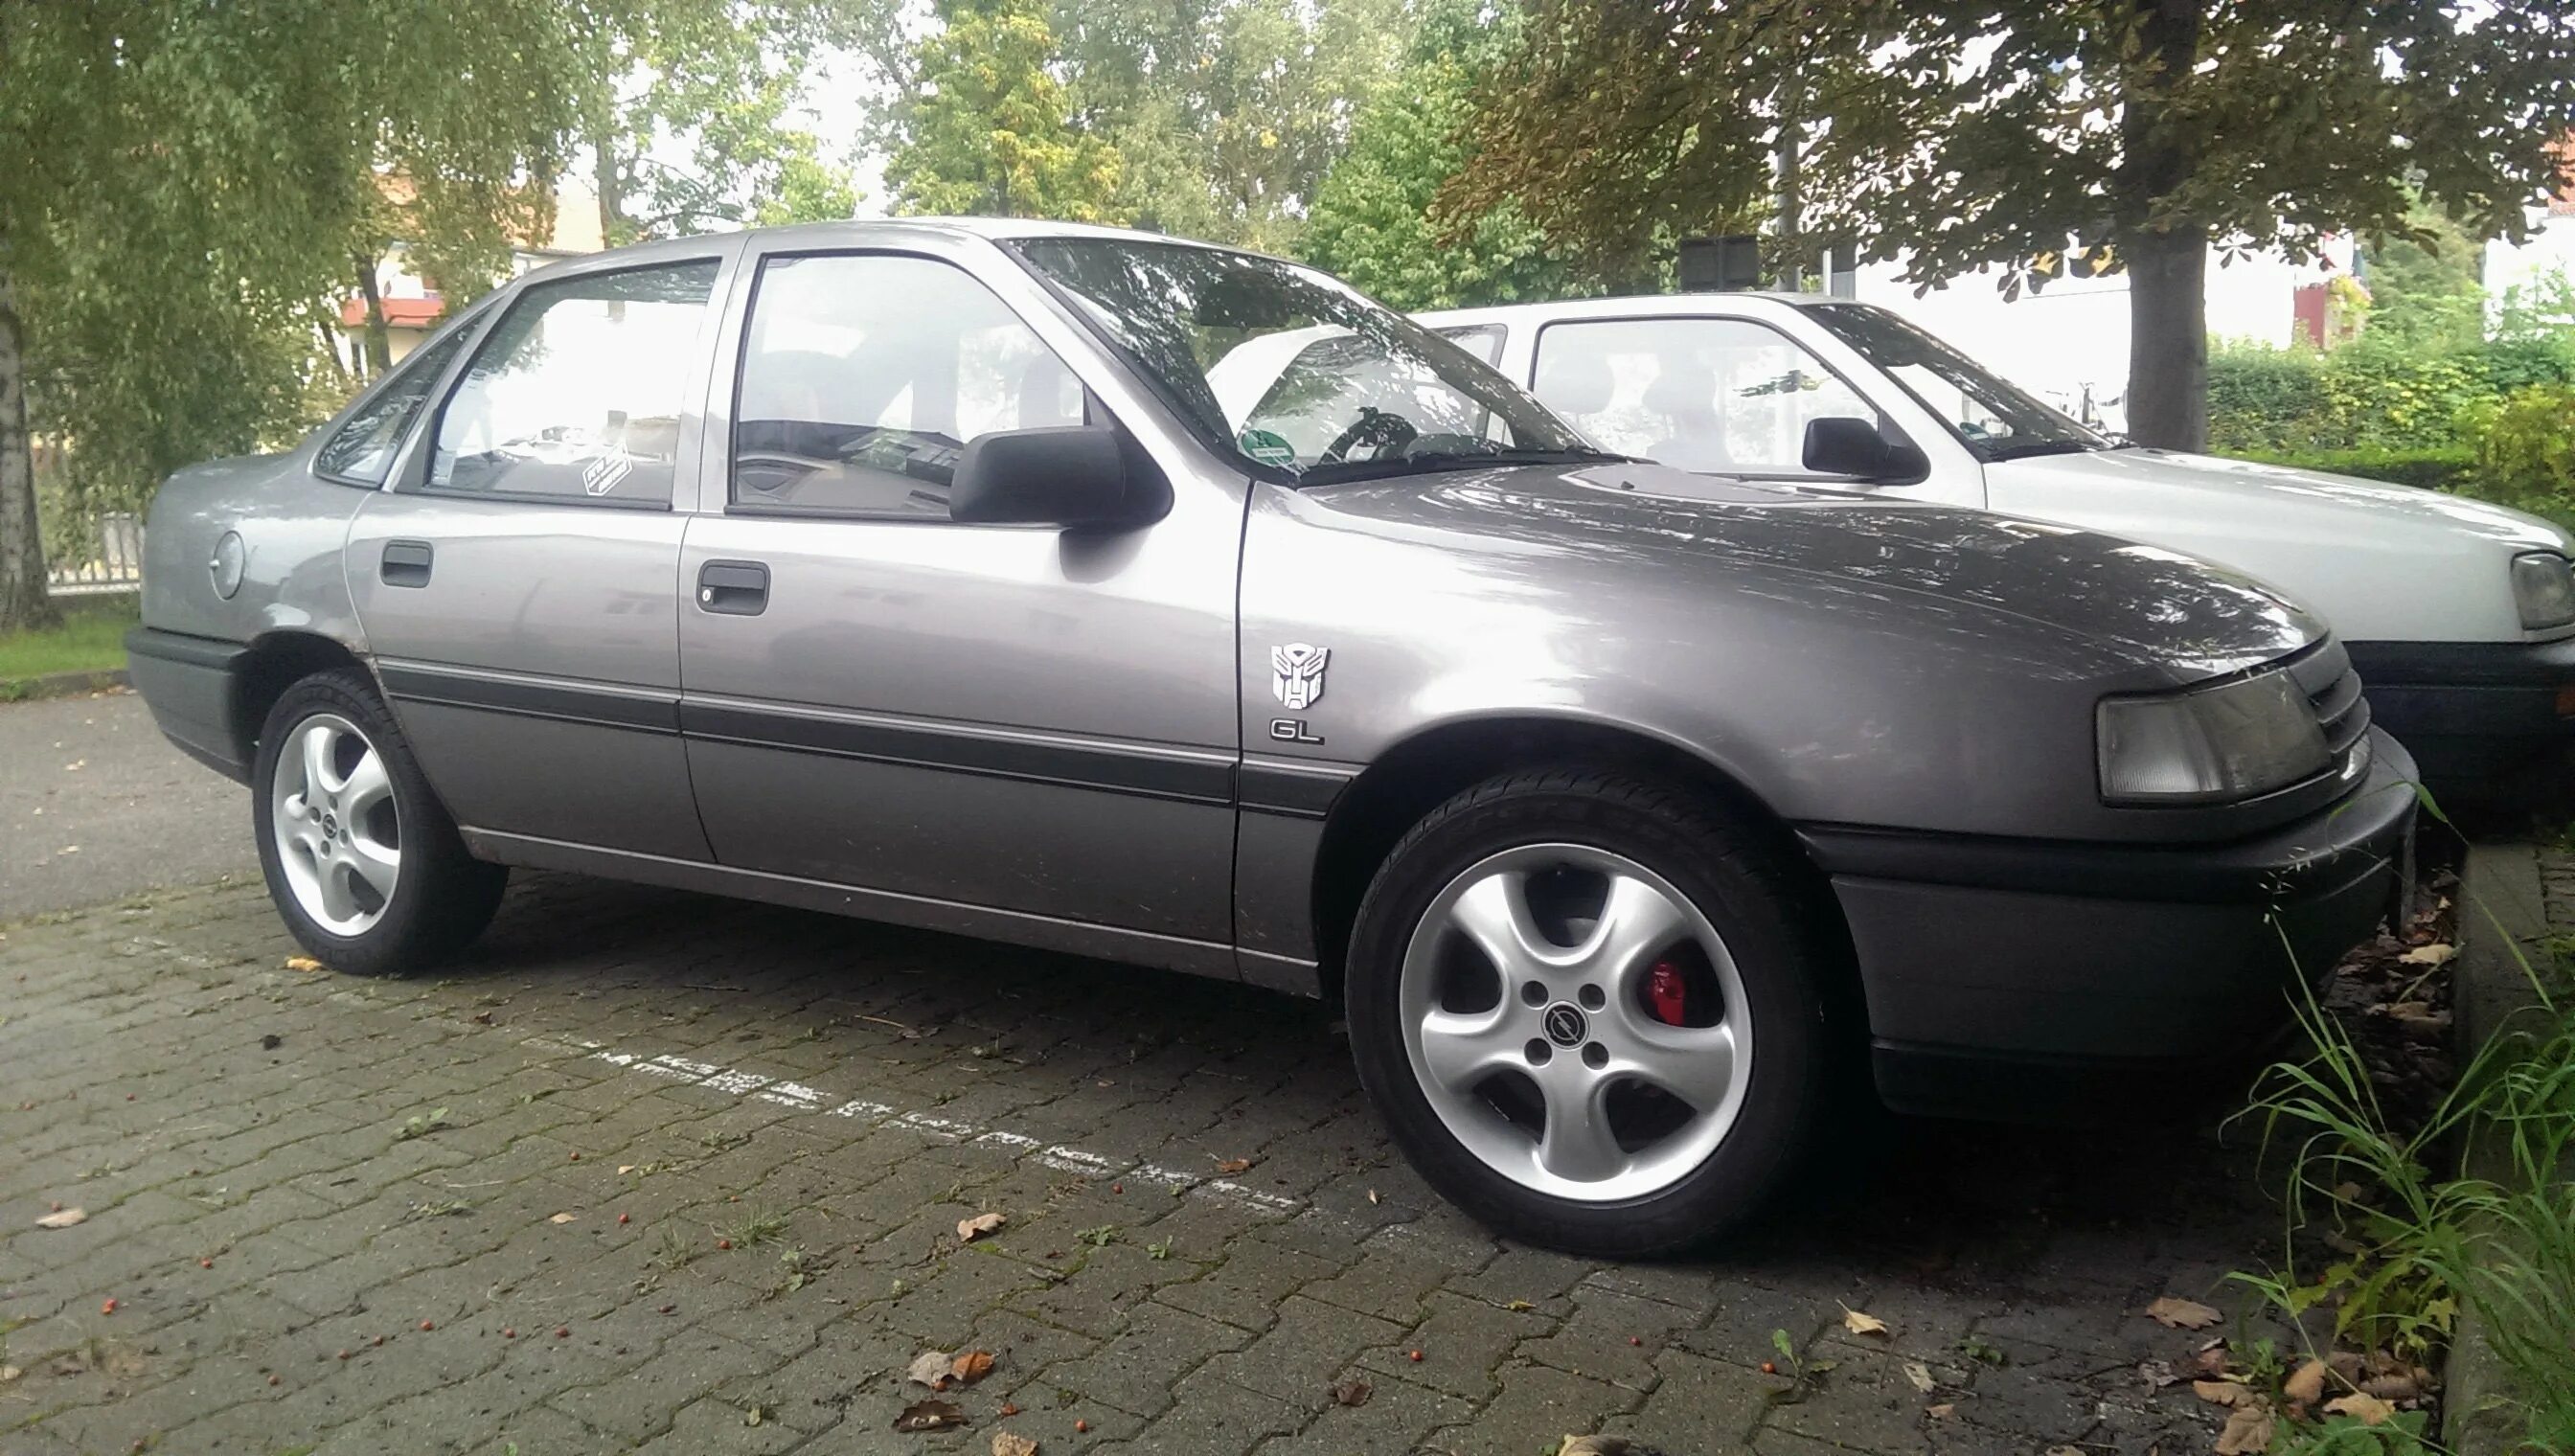 Opel Vectra 1.8. Opel Vectra 1.8 i. Опель Вектра 1.8 1993г. Опель Вектра 91г. Опель вектра б 1.8 бензин